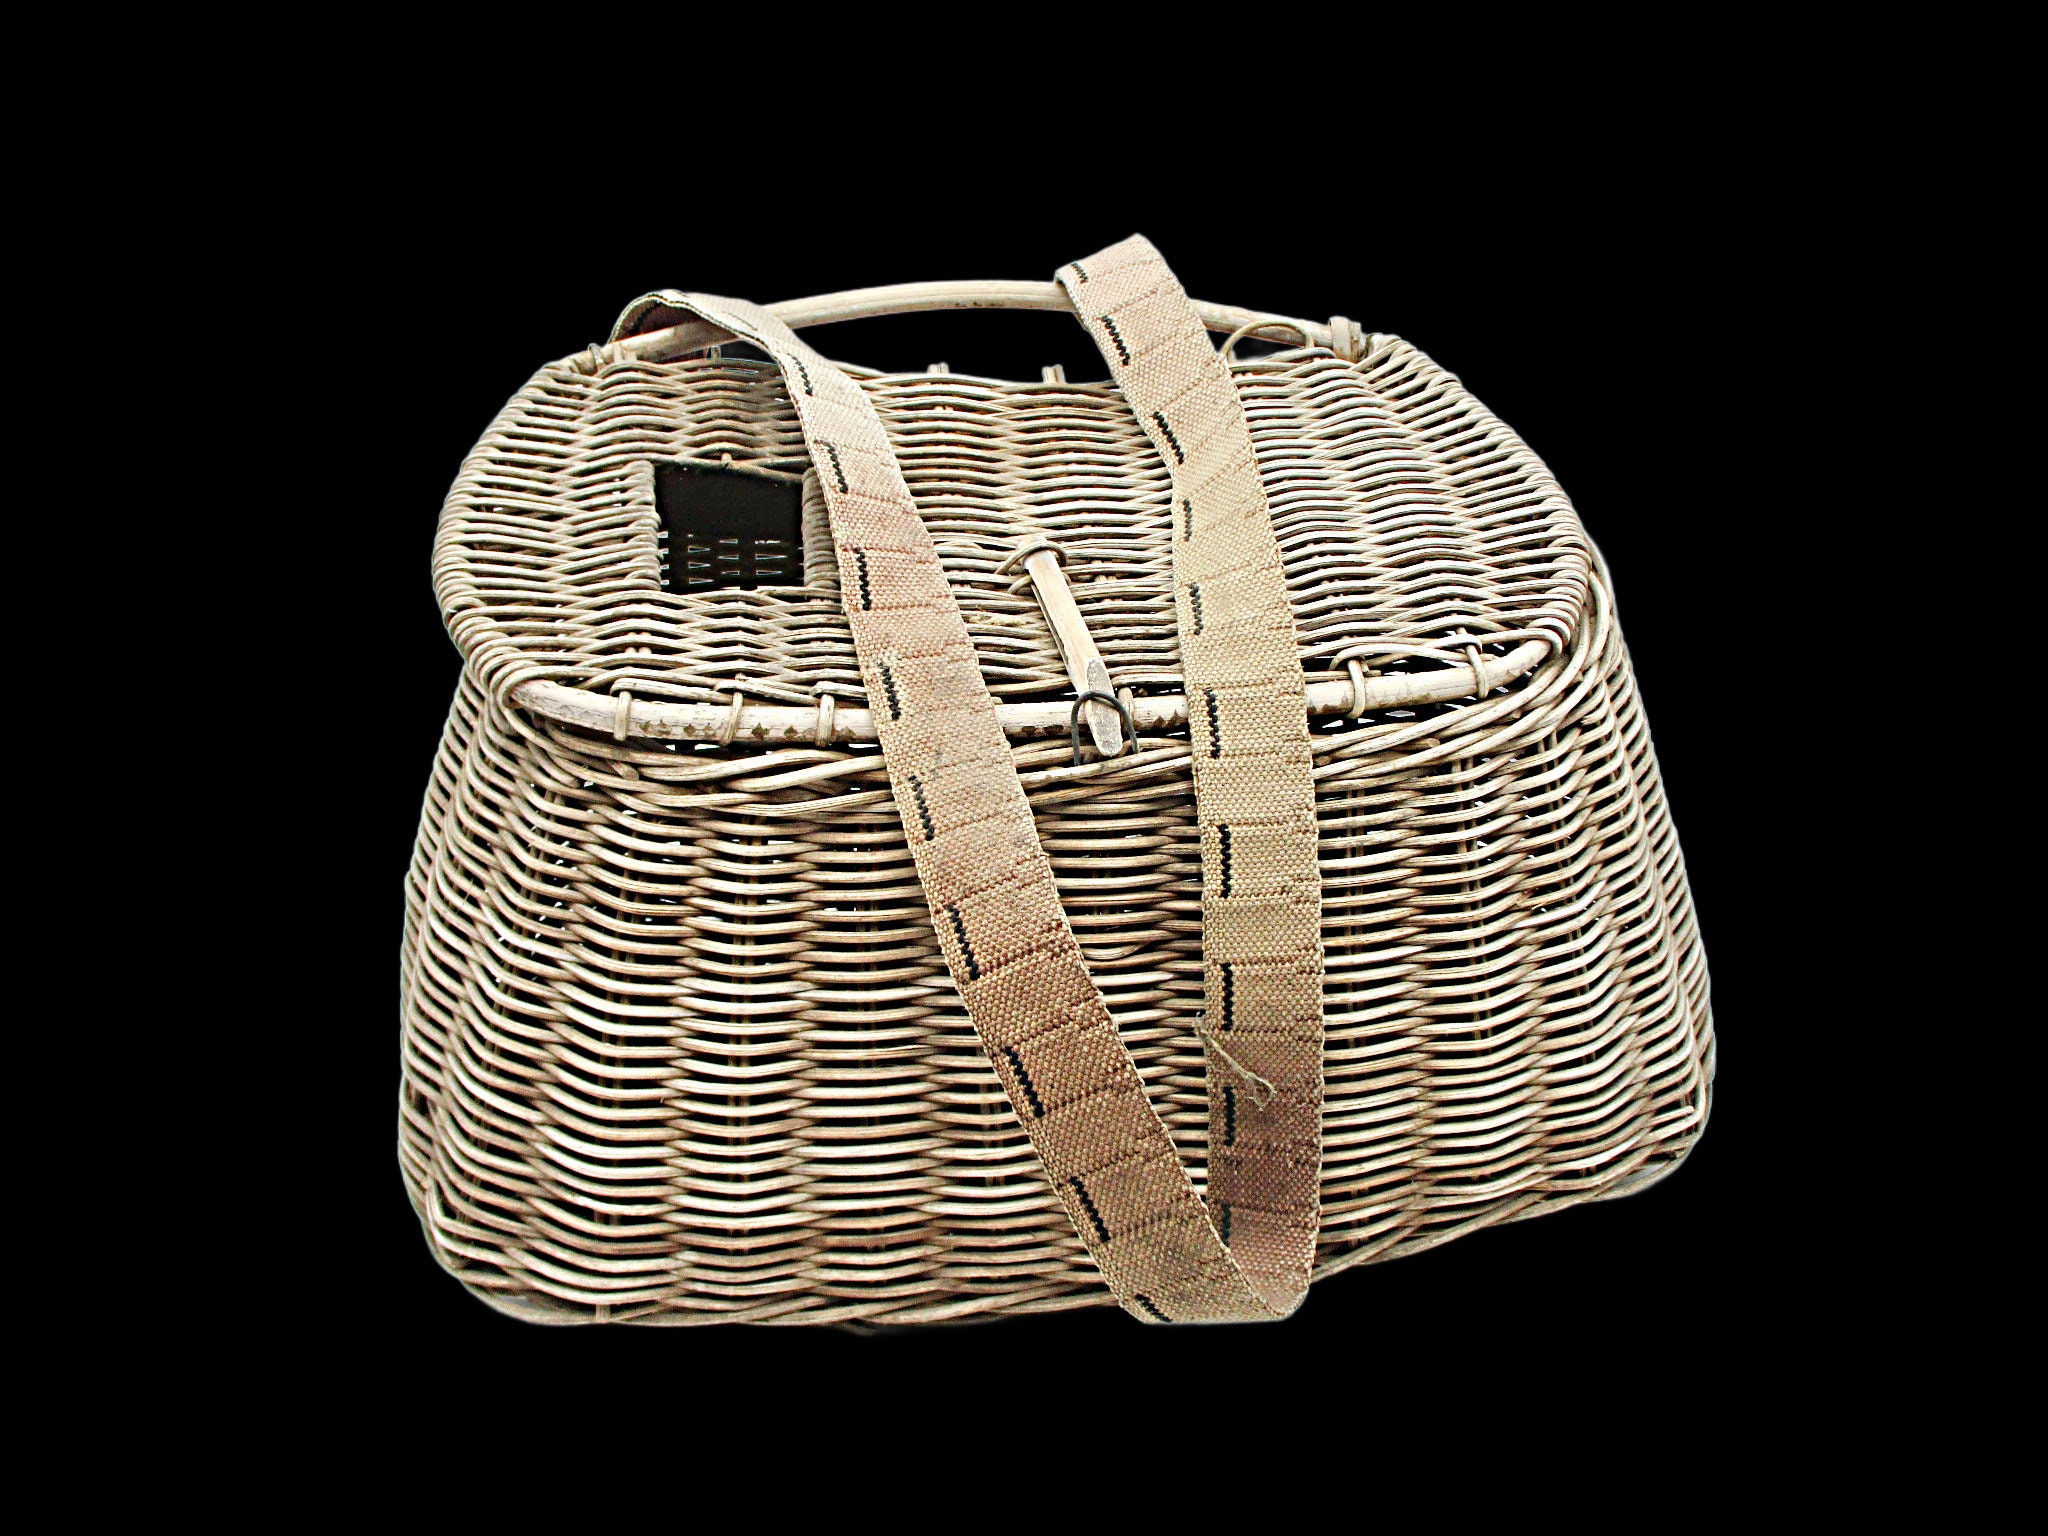 Vintage Fishing Creel Basket, Canvas Strap, Wicker, Lake House